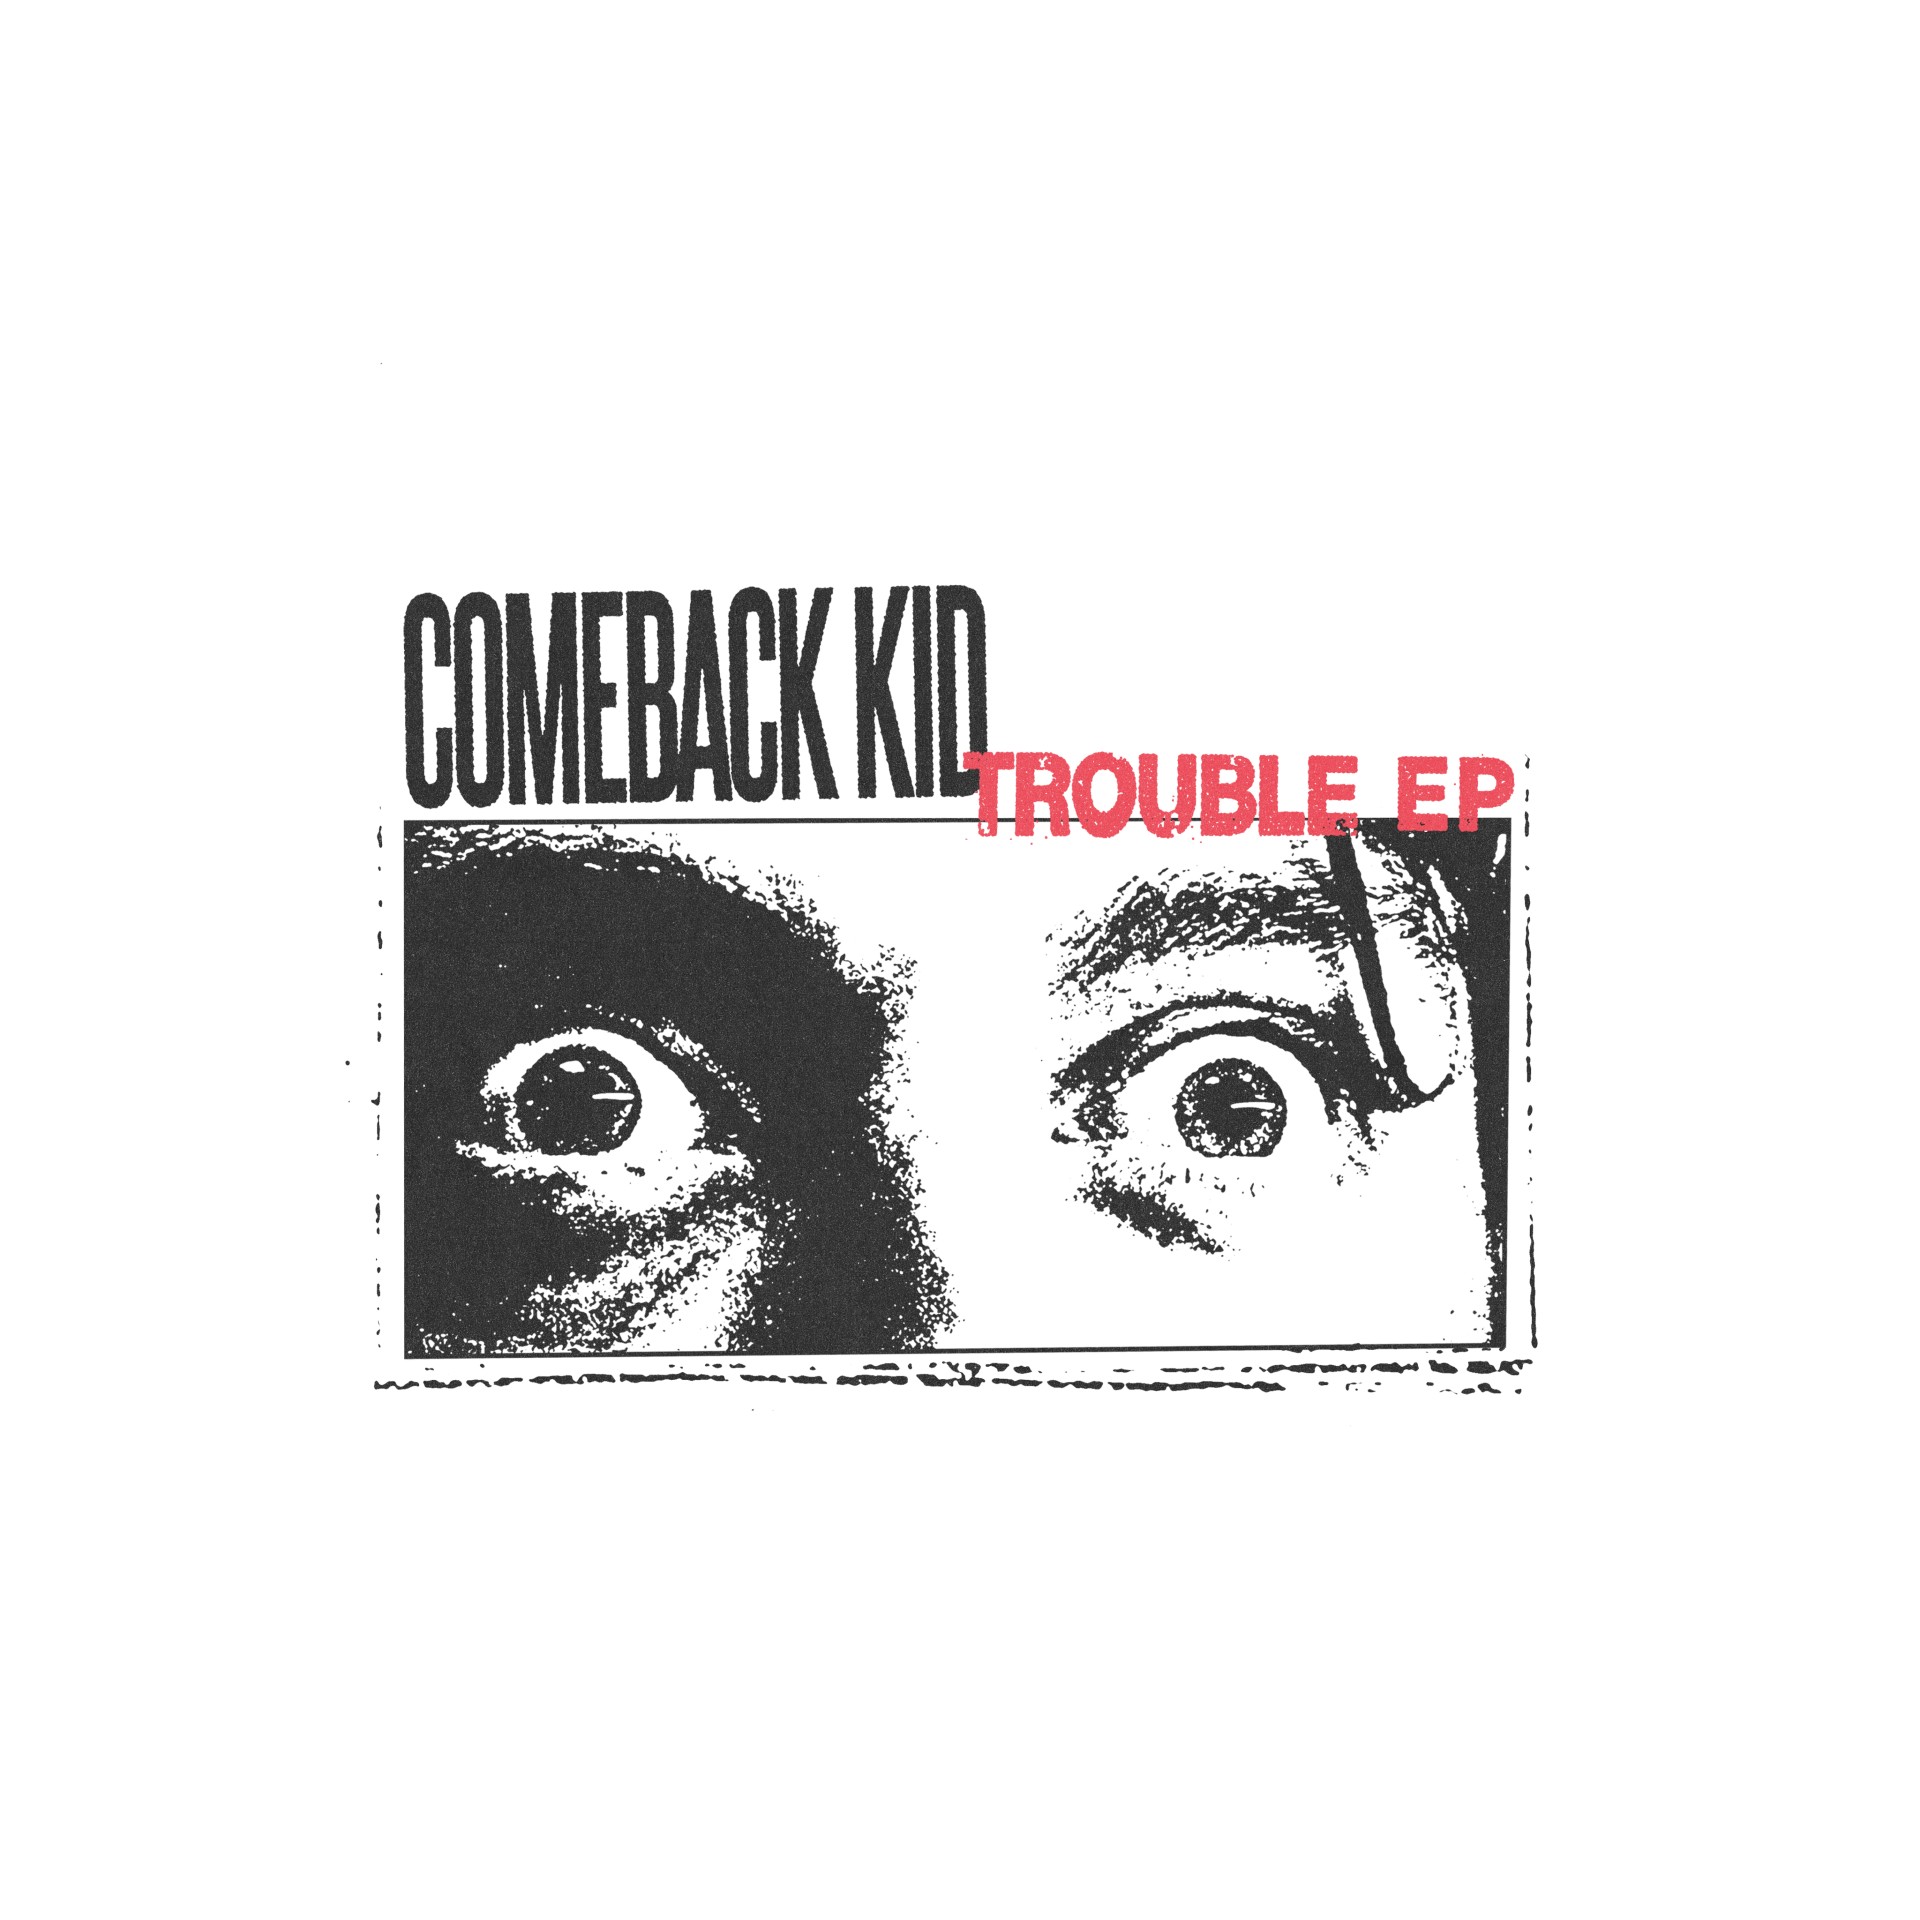 Comeback Kid ‘Trouble EP’ album artwork